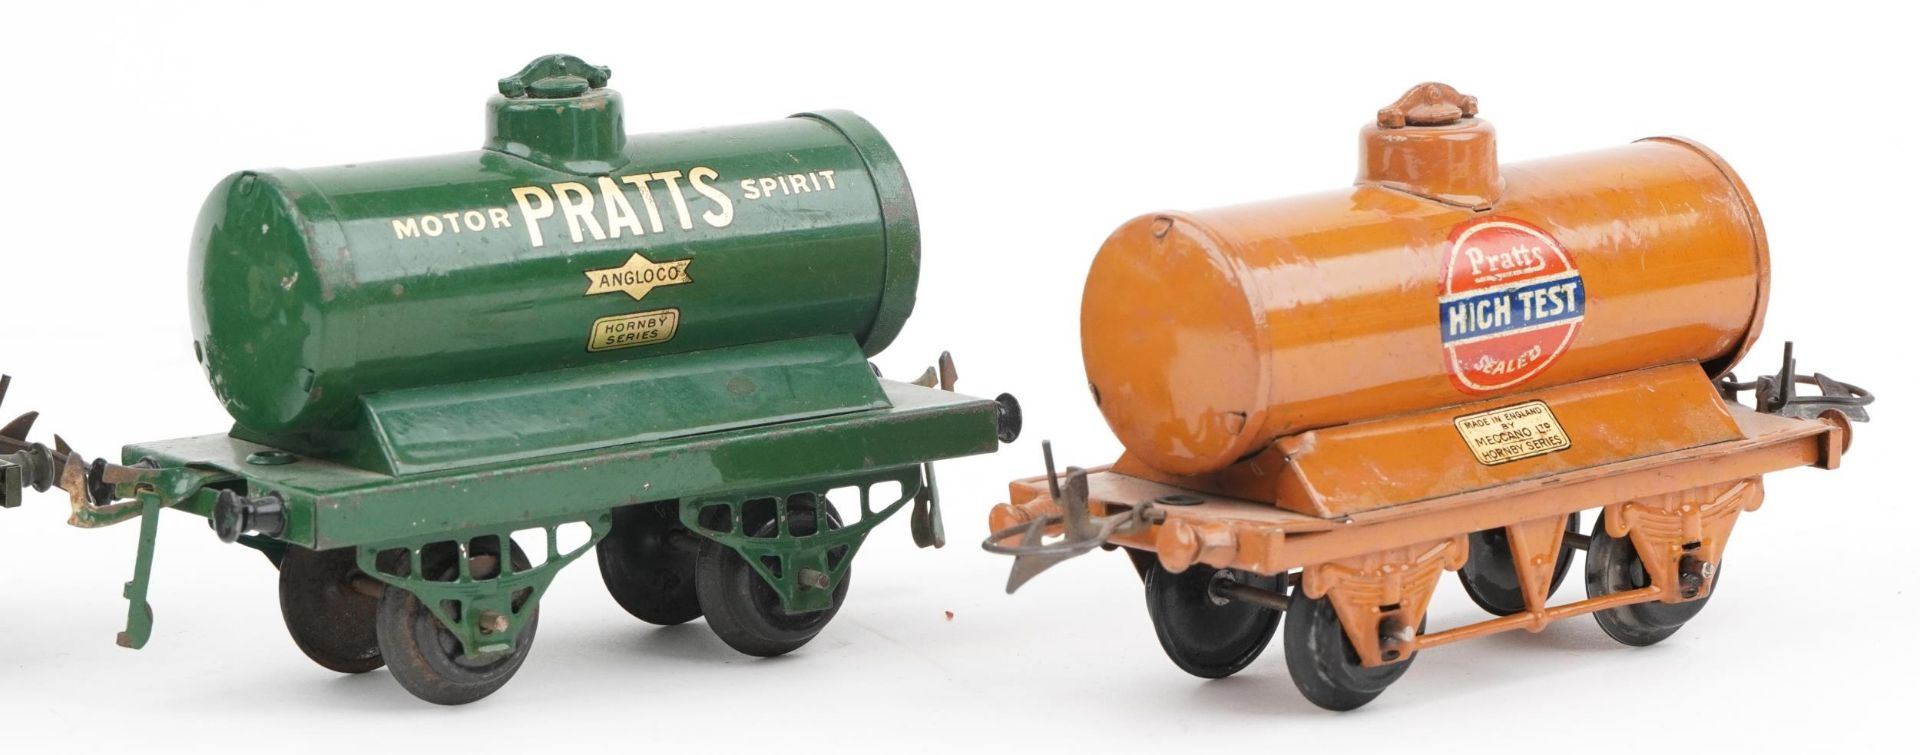 Four Hornby O gauge tinplate model railway advertising tankers comprising Pratt's Motor Spirit, - Image 3 of 5